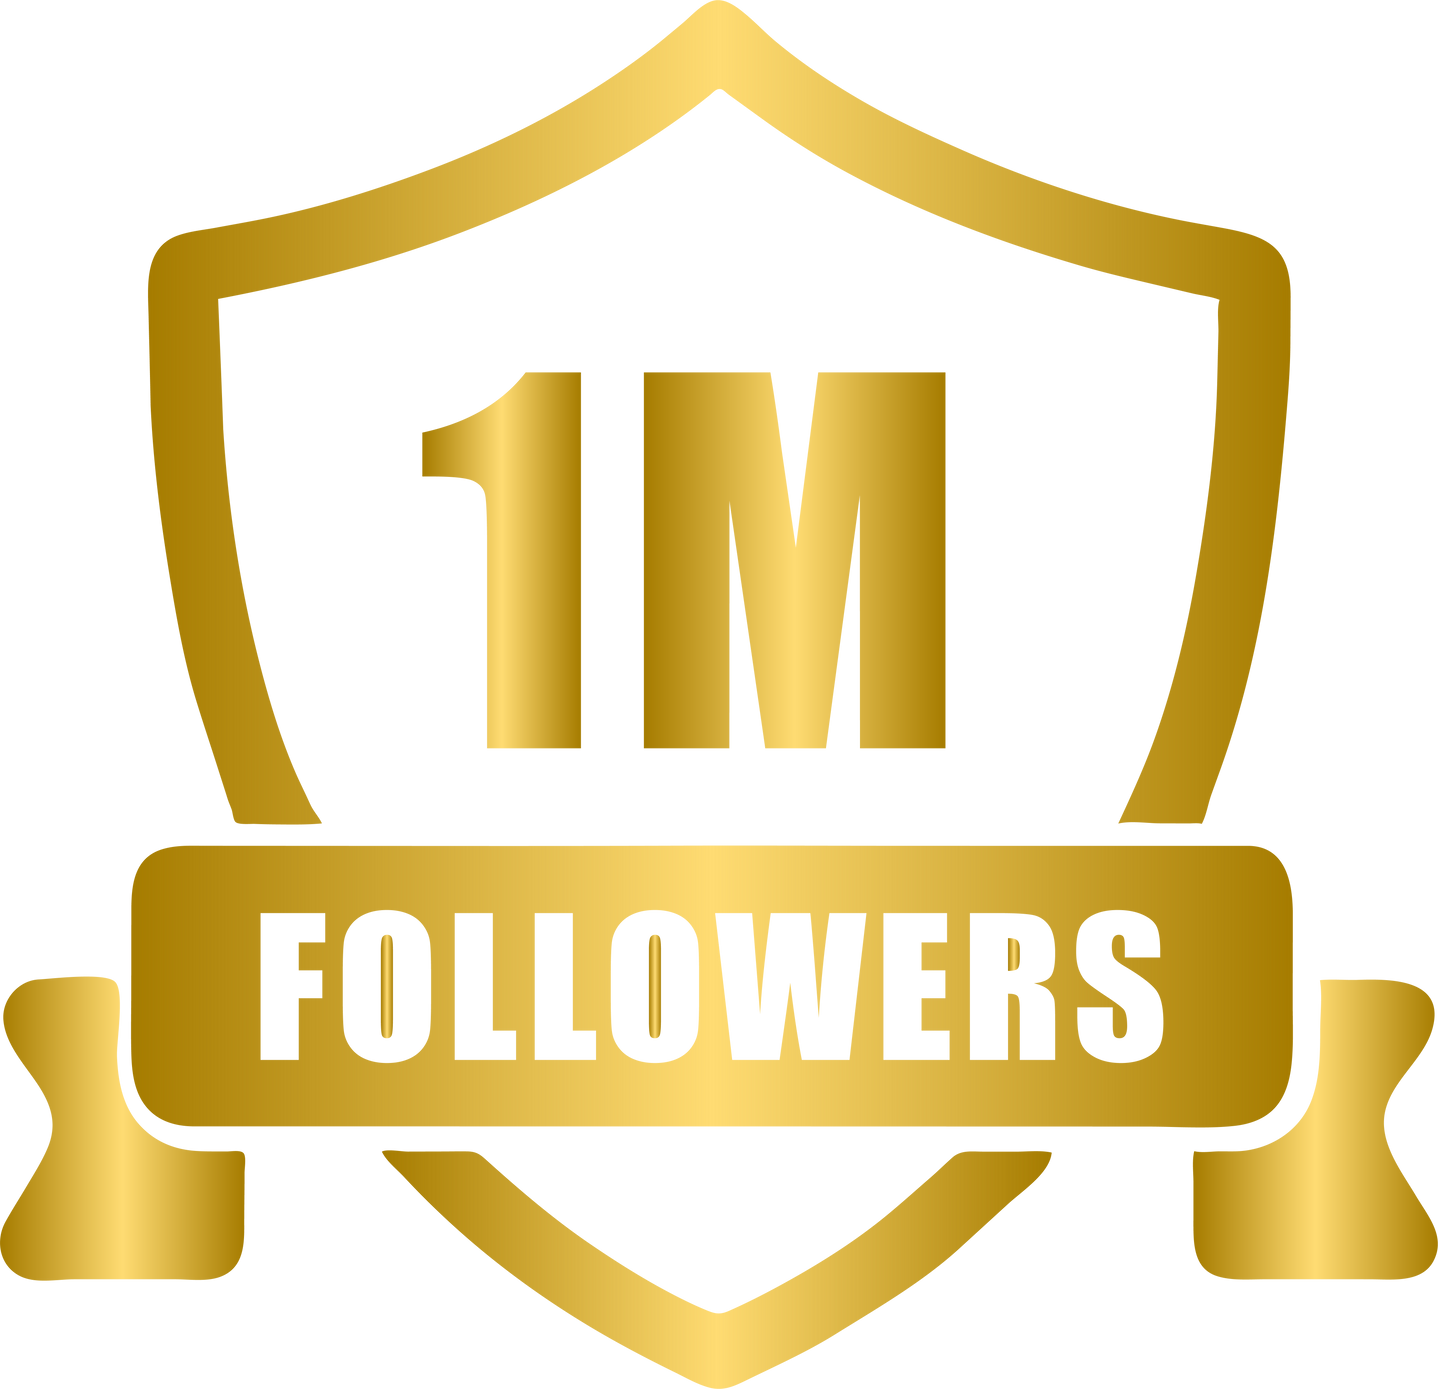 1 million followers celebration